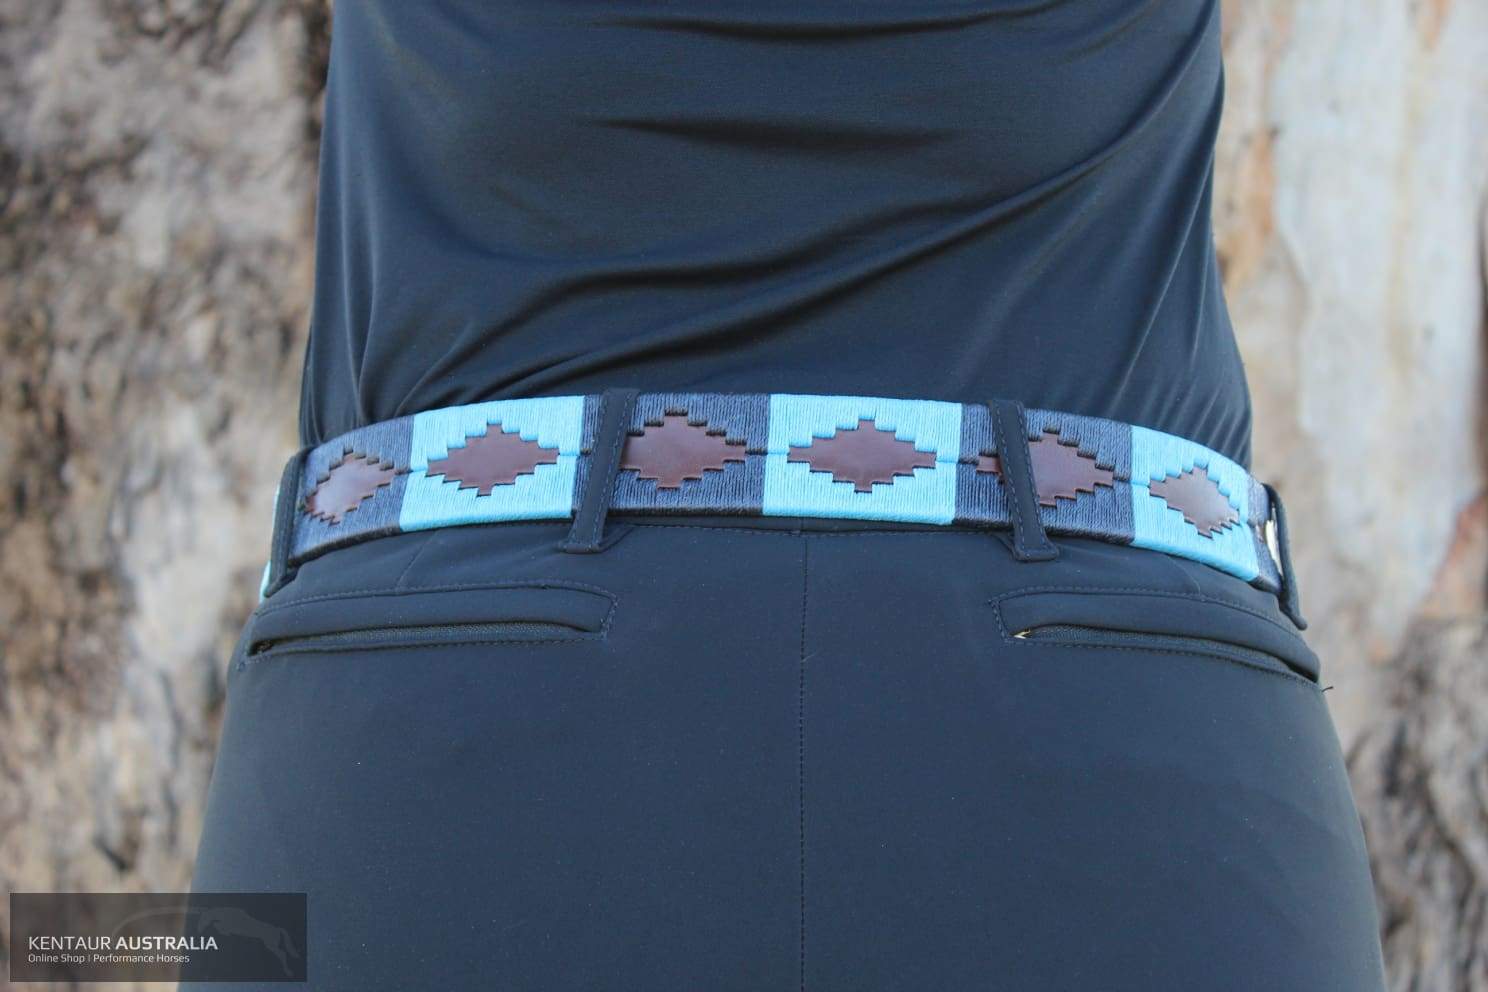 Pampeano ’Azules’ Belt 85cm Belt